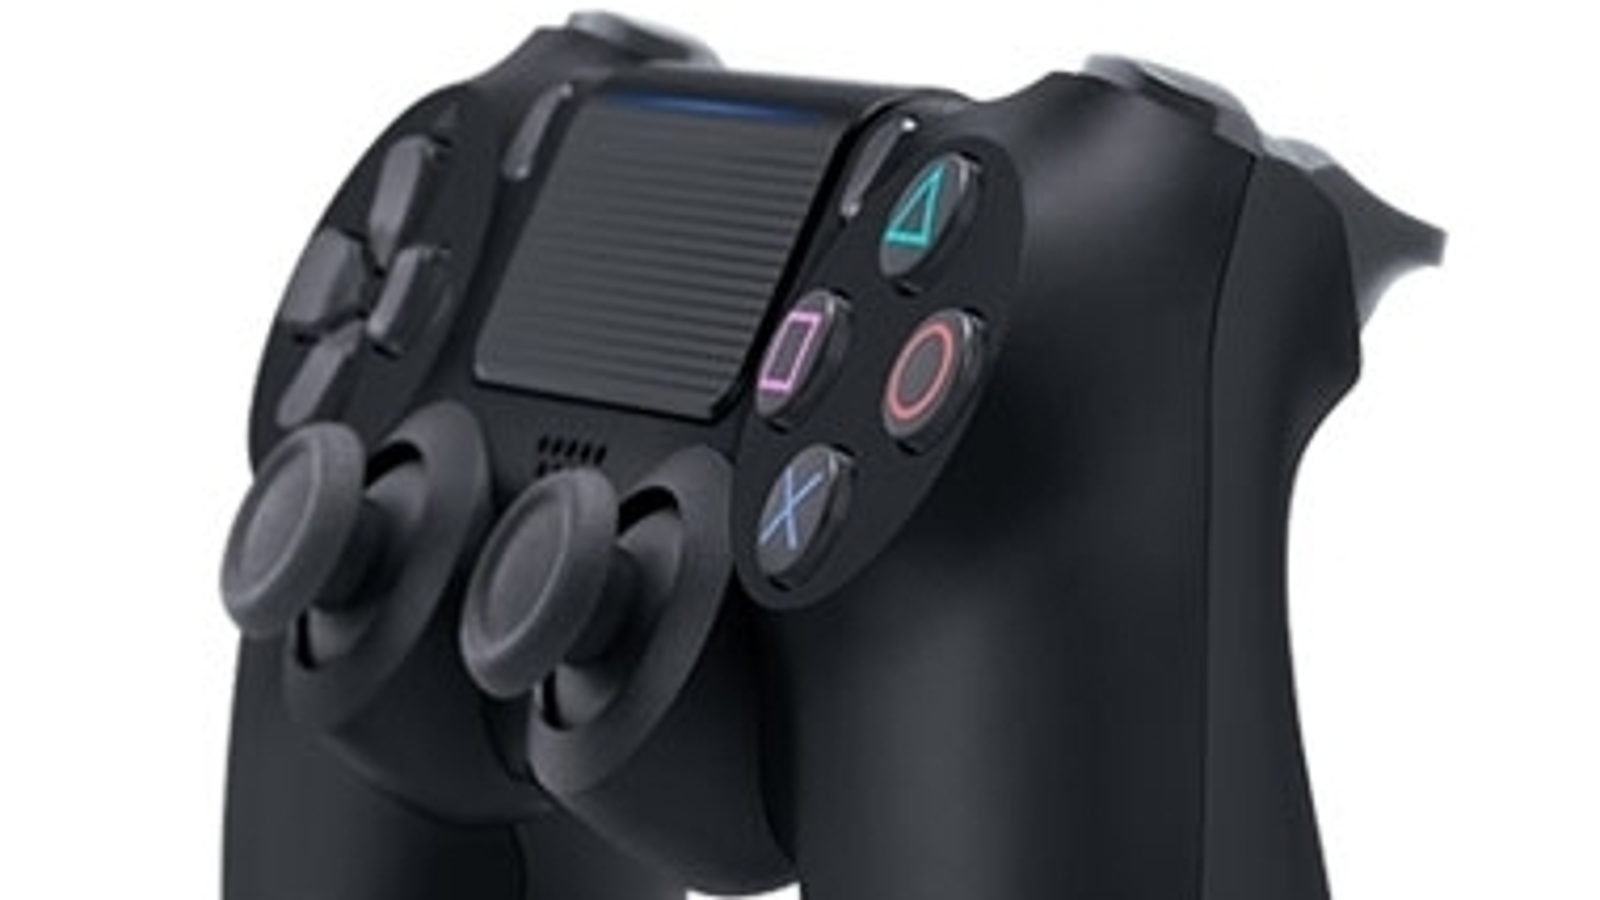 PS5's PS4 backward compatibility works like a charm - Polygon